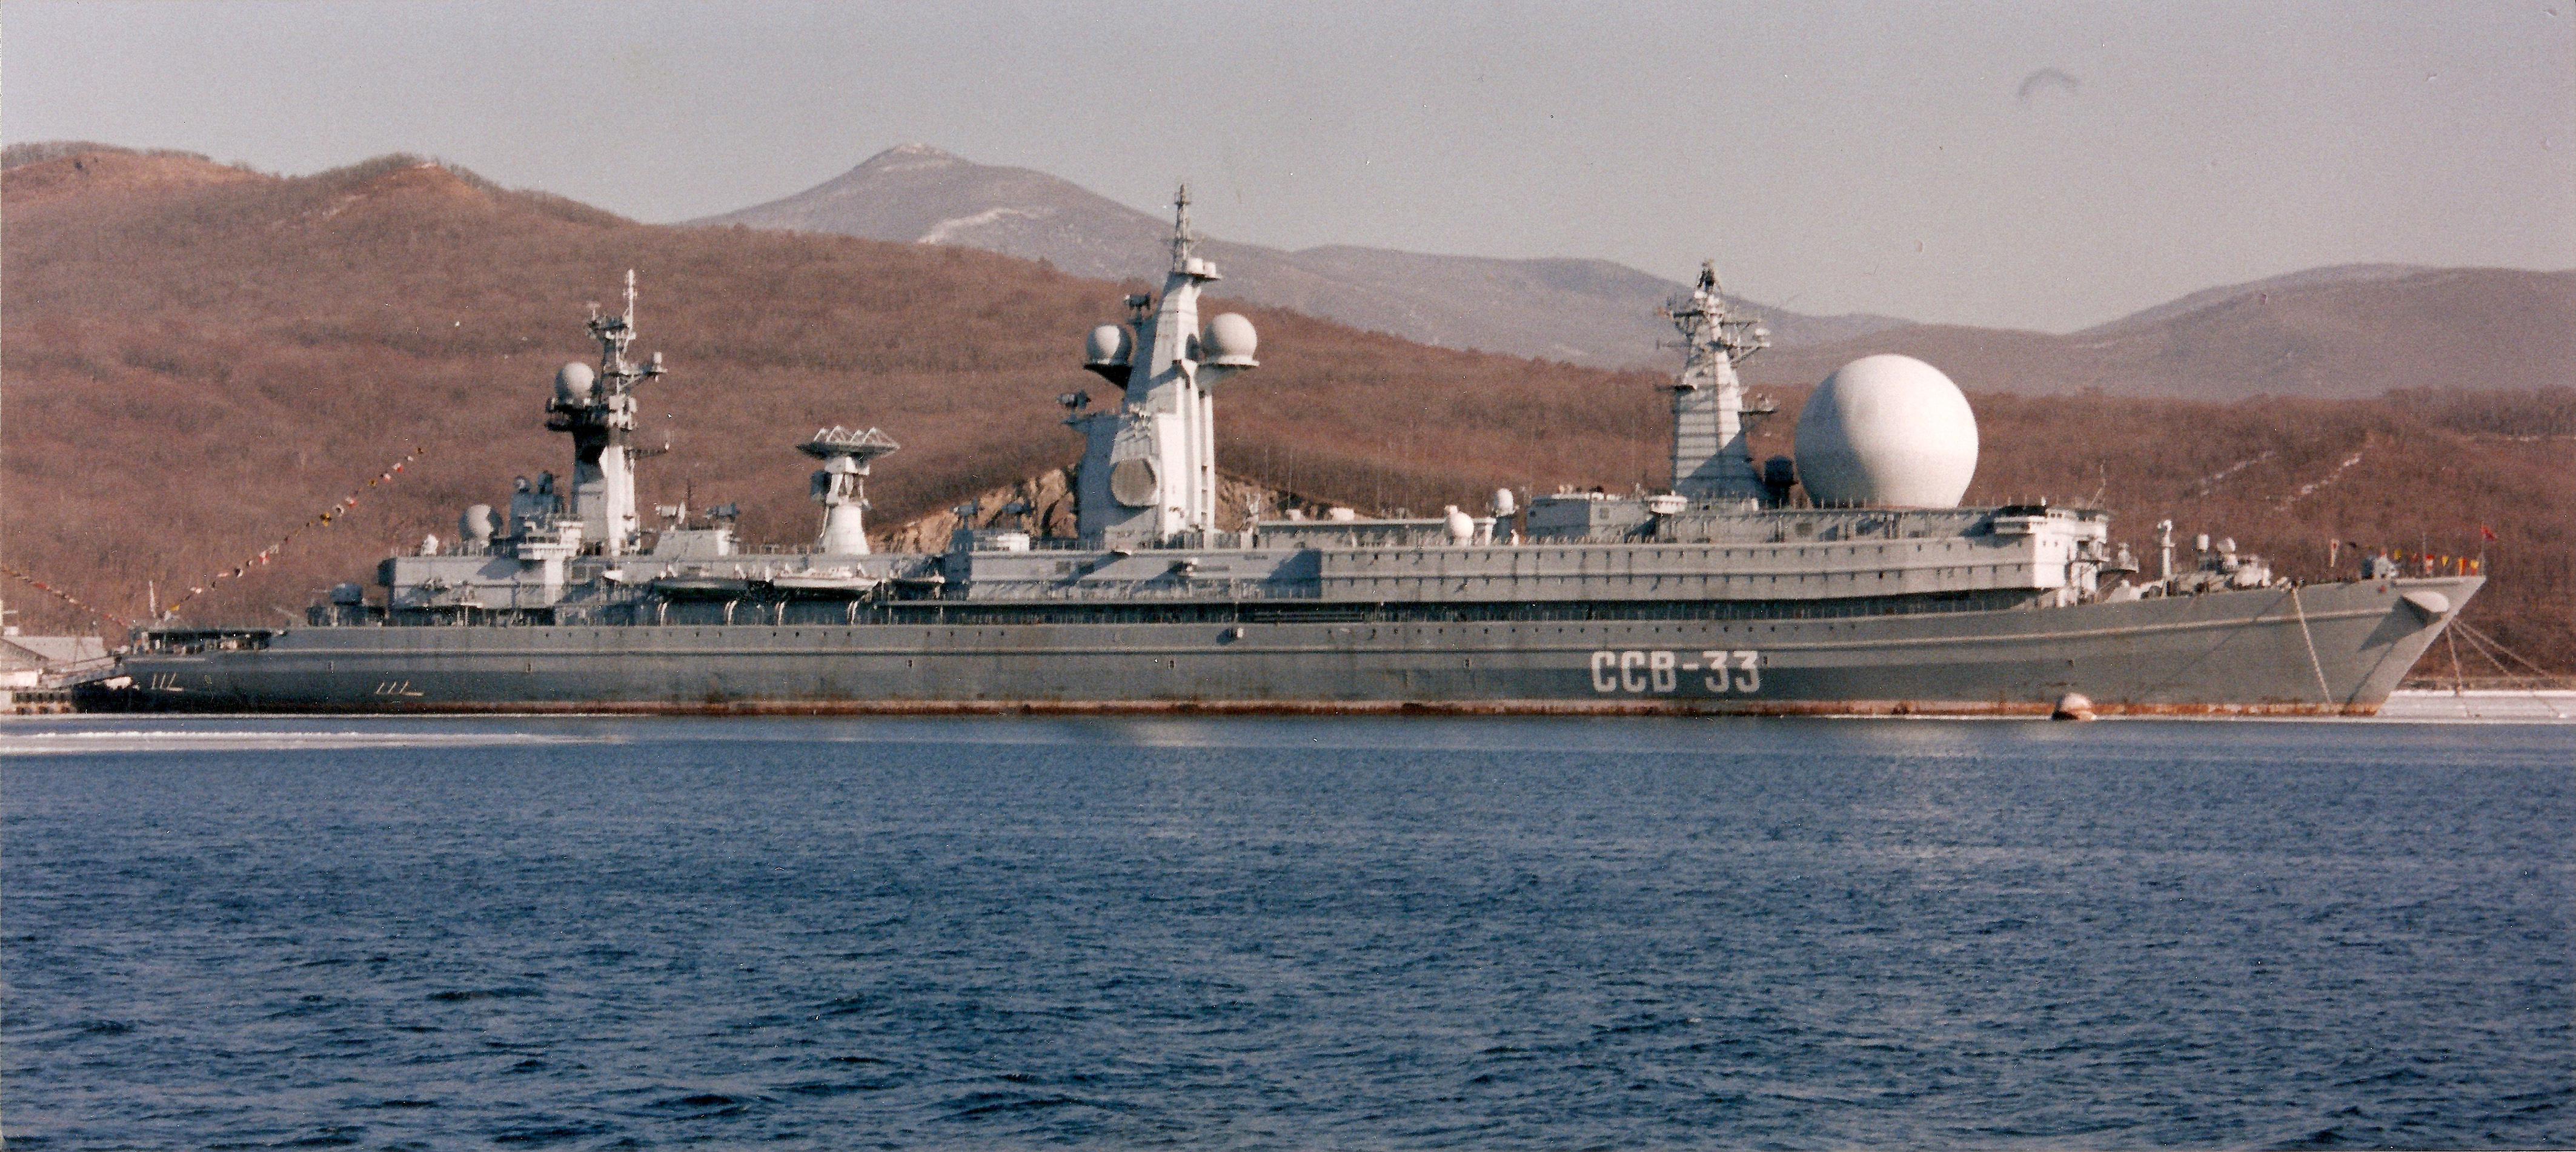 Soviet Communications Ship Ssv-33 Wallpapers